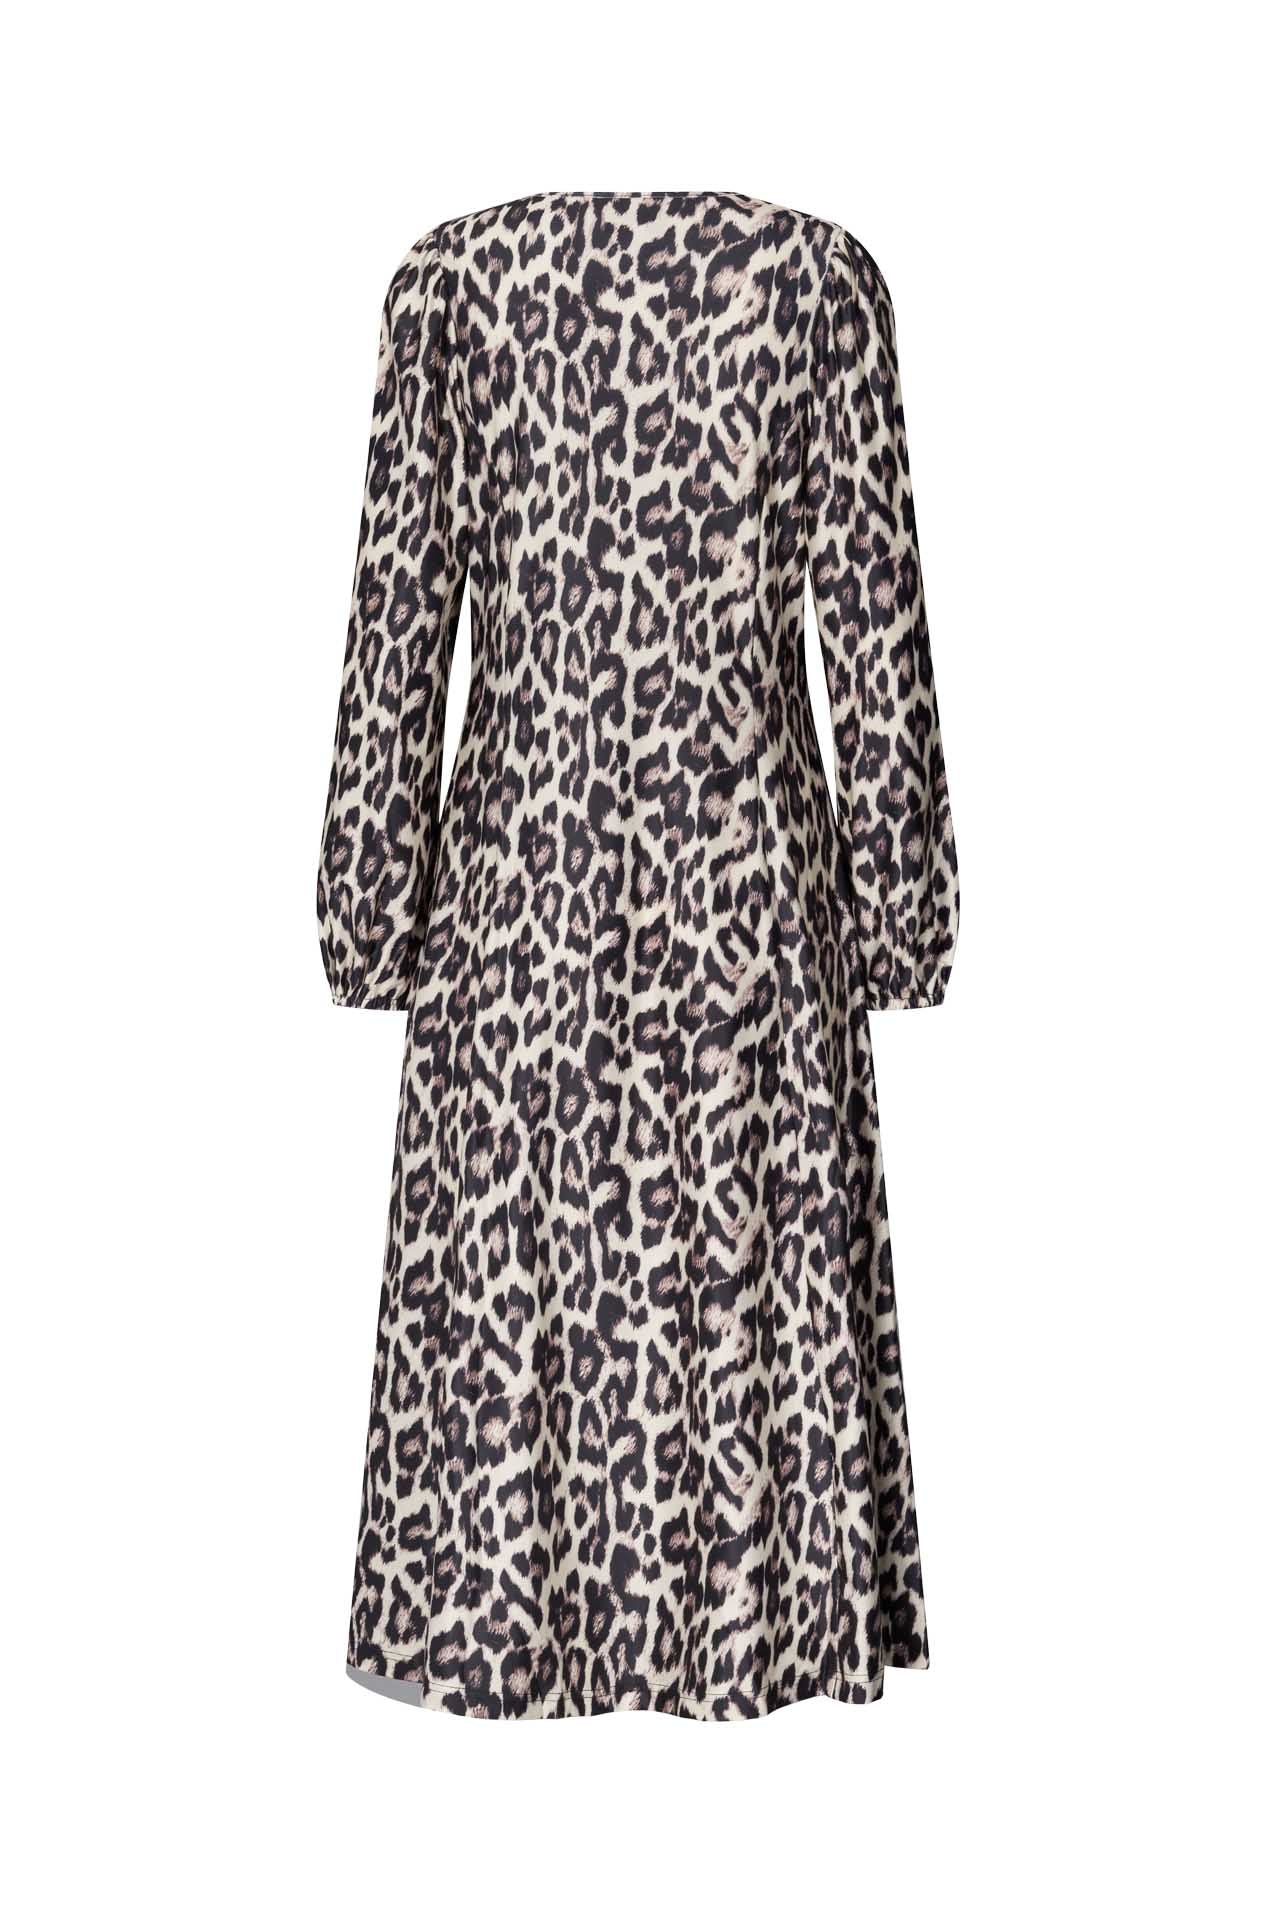 Lollys Laundry Lake Dress Dress 72 Leopard Print